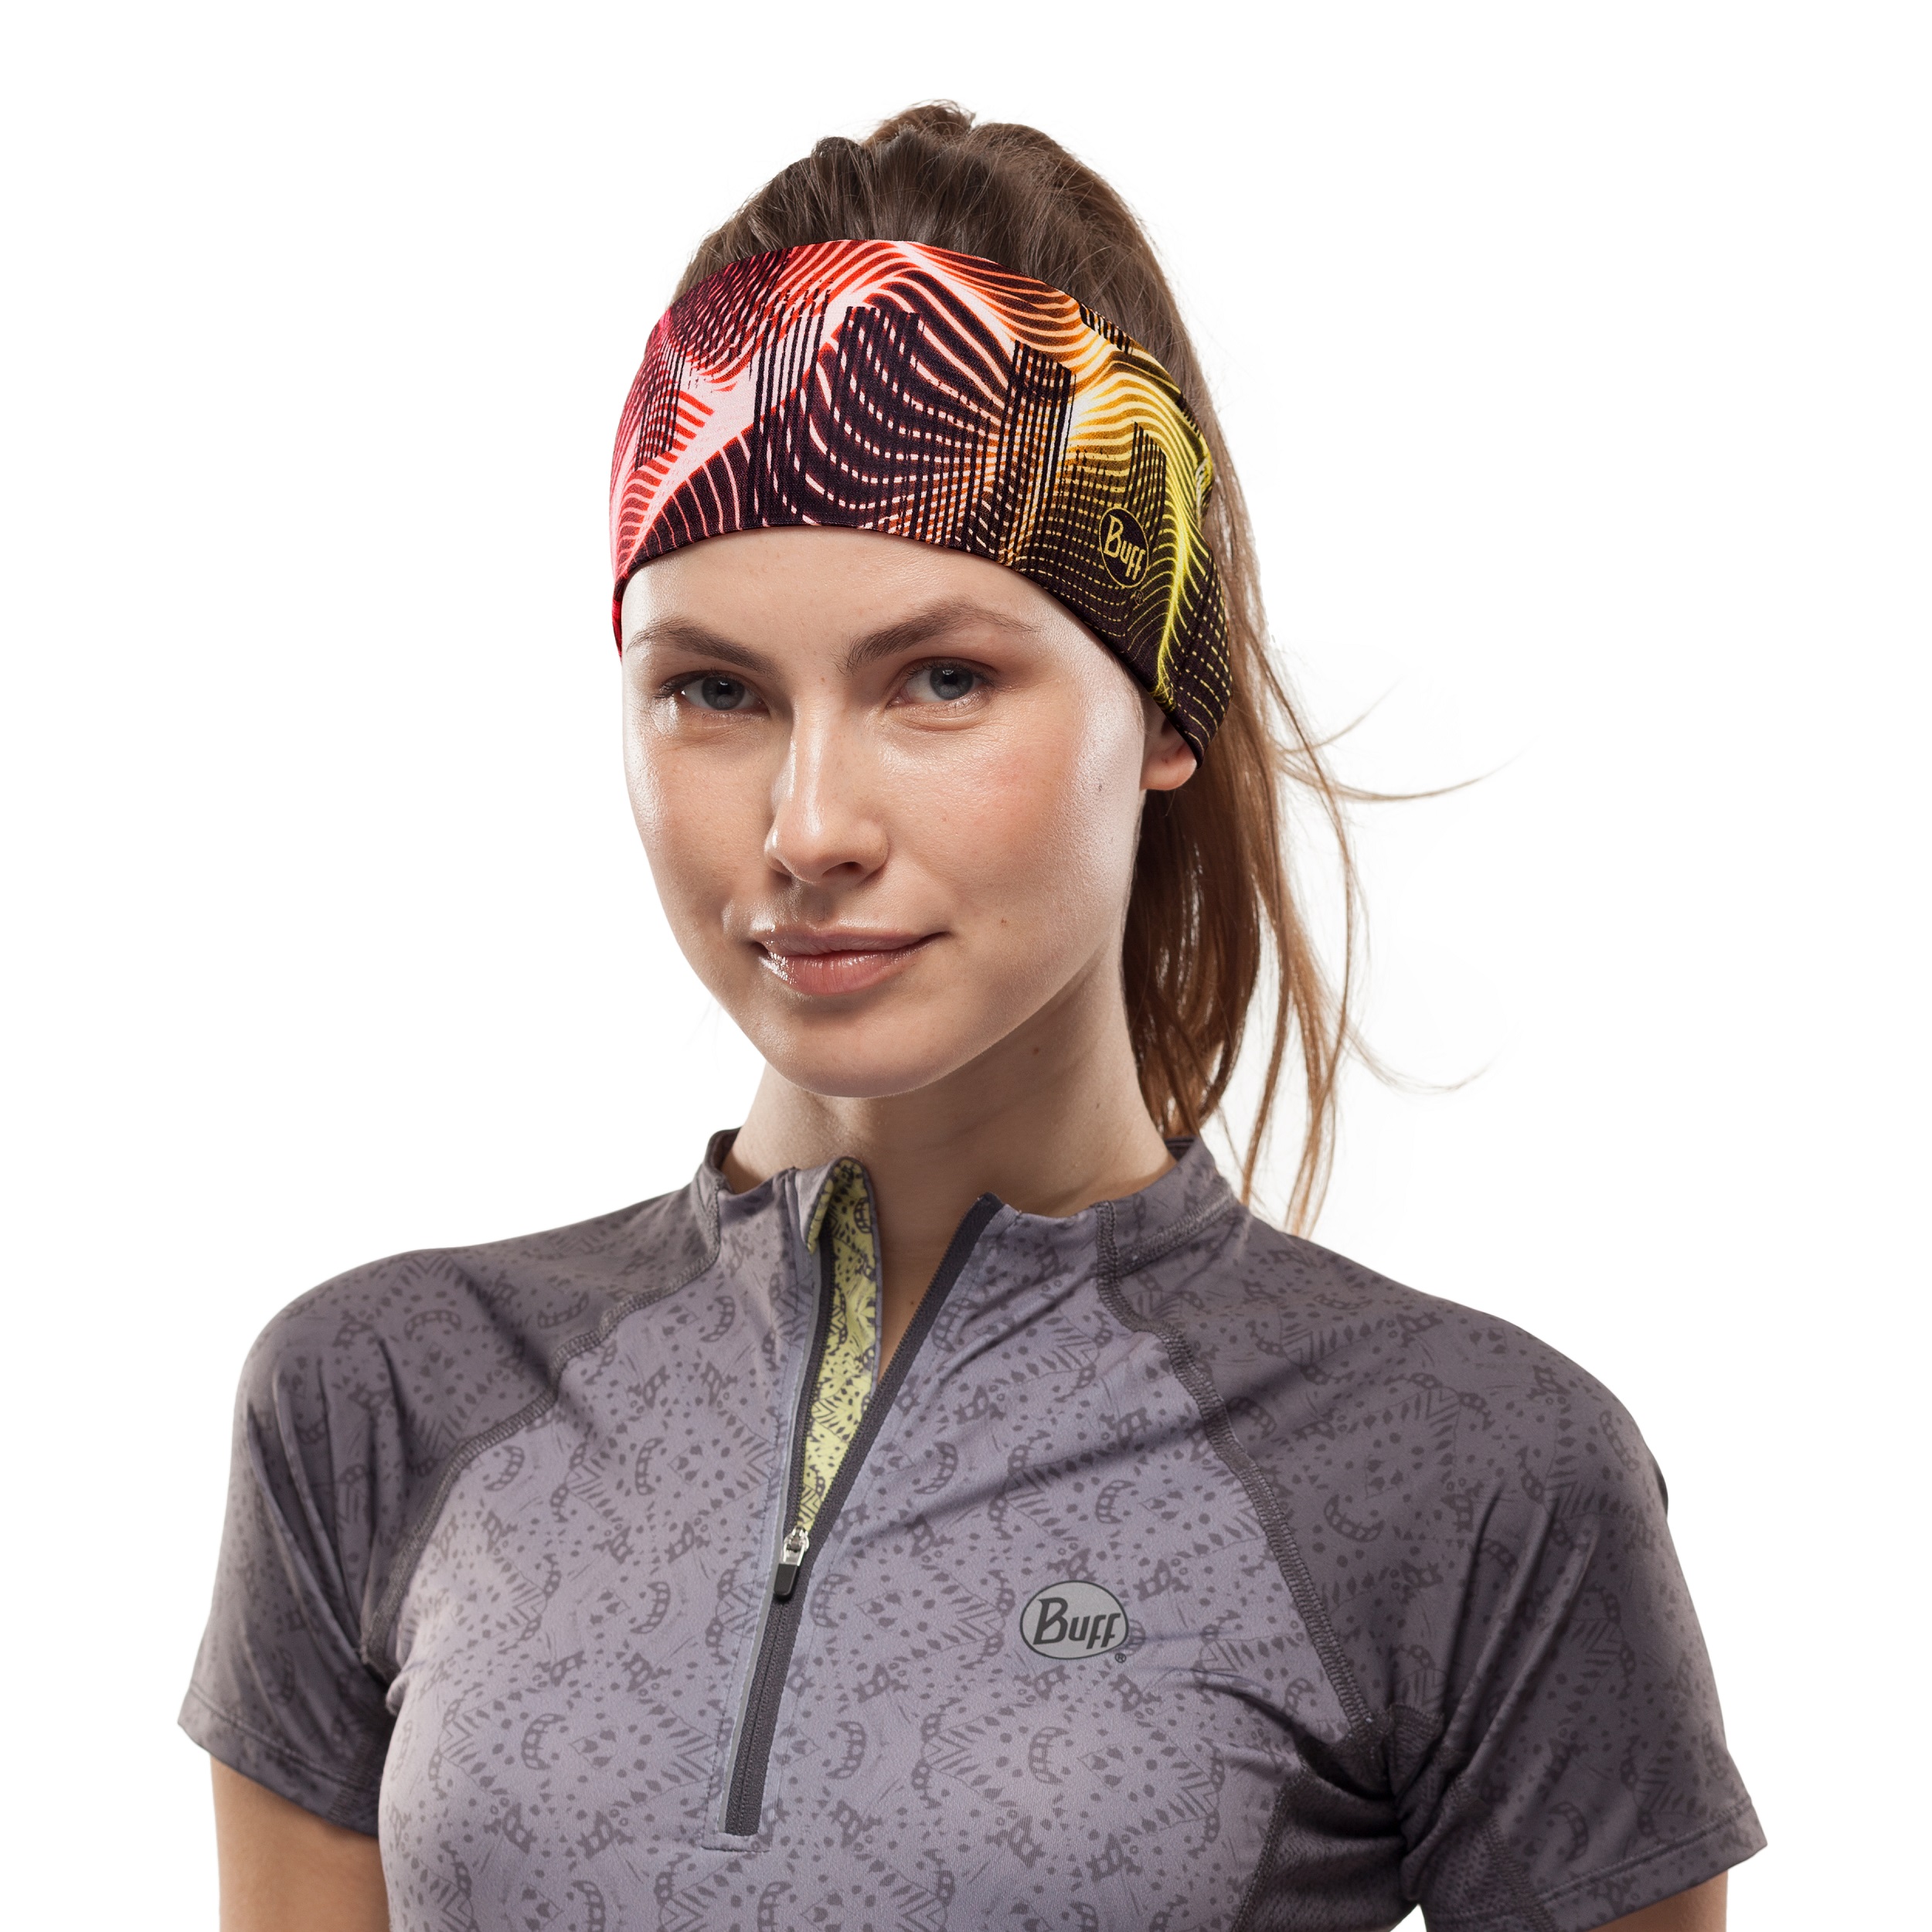 Повязка на голову для бега. Buff COOLNET UV+ Headband. Buff COOLNET UV+. Buff повязка на голову. Спортивная повязка.